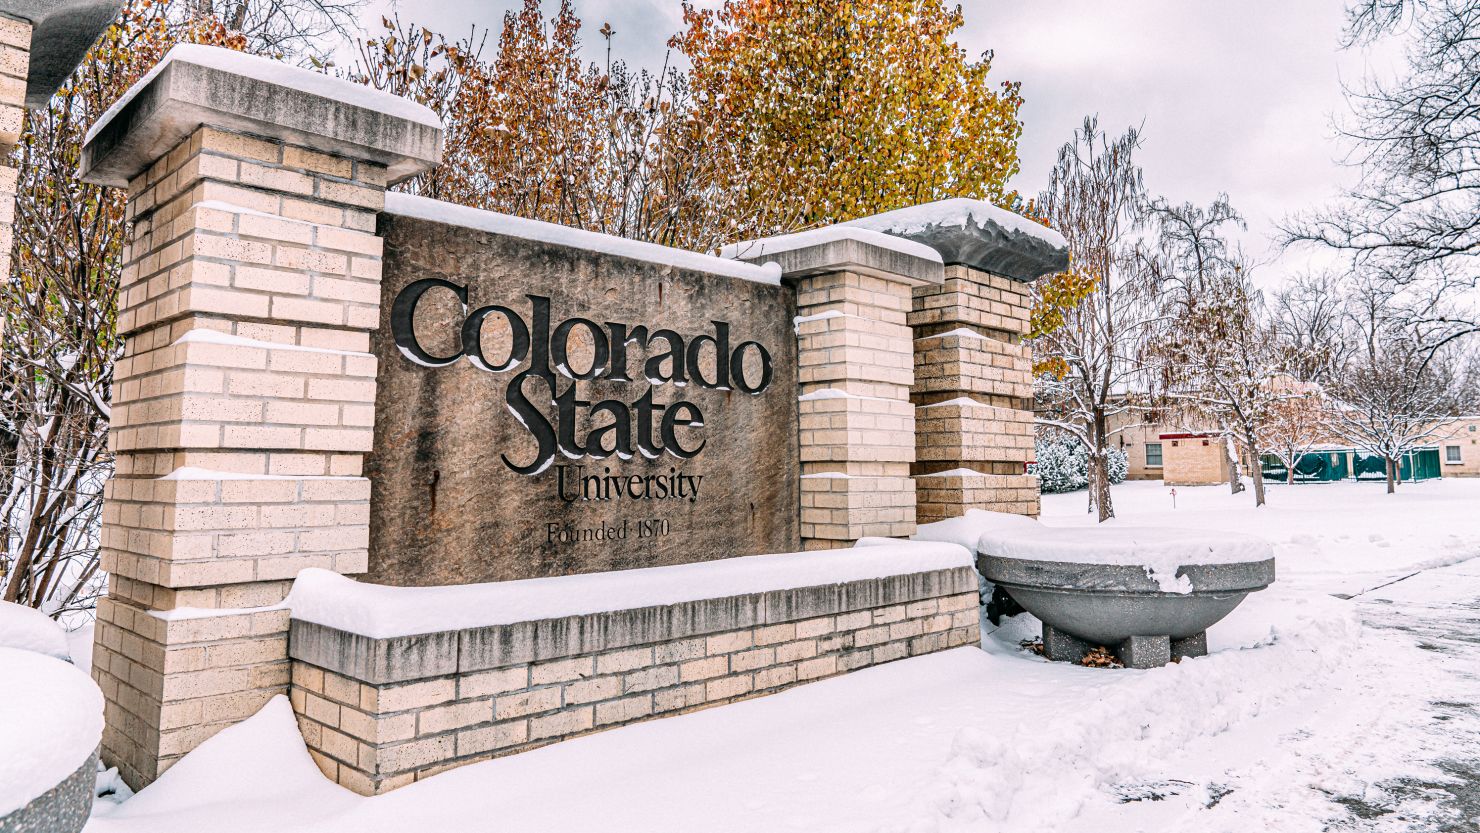 Entrance to Colorado State University in Fort Collins, Colorado.